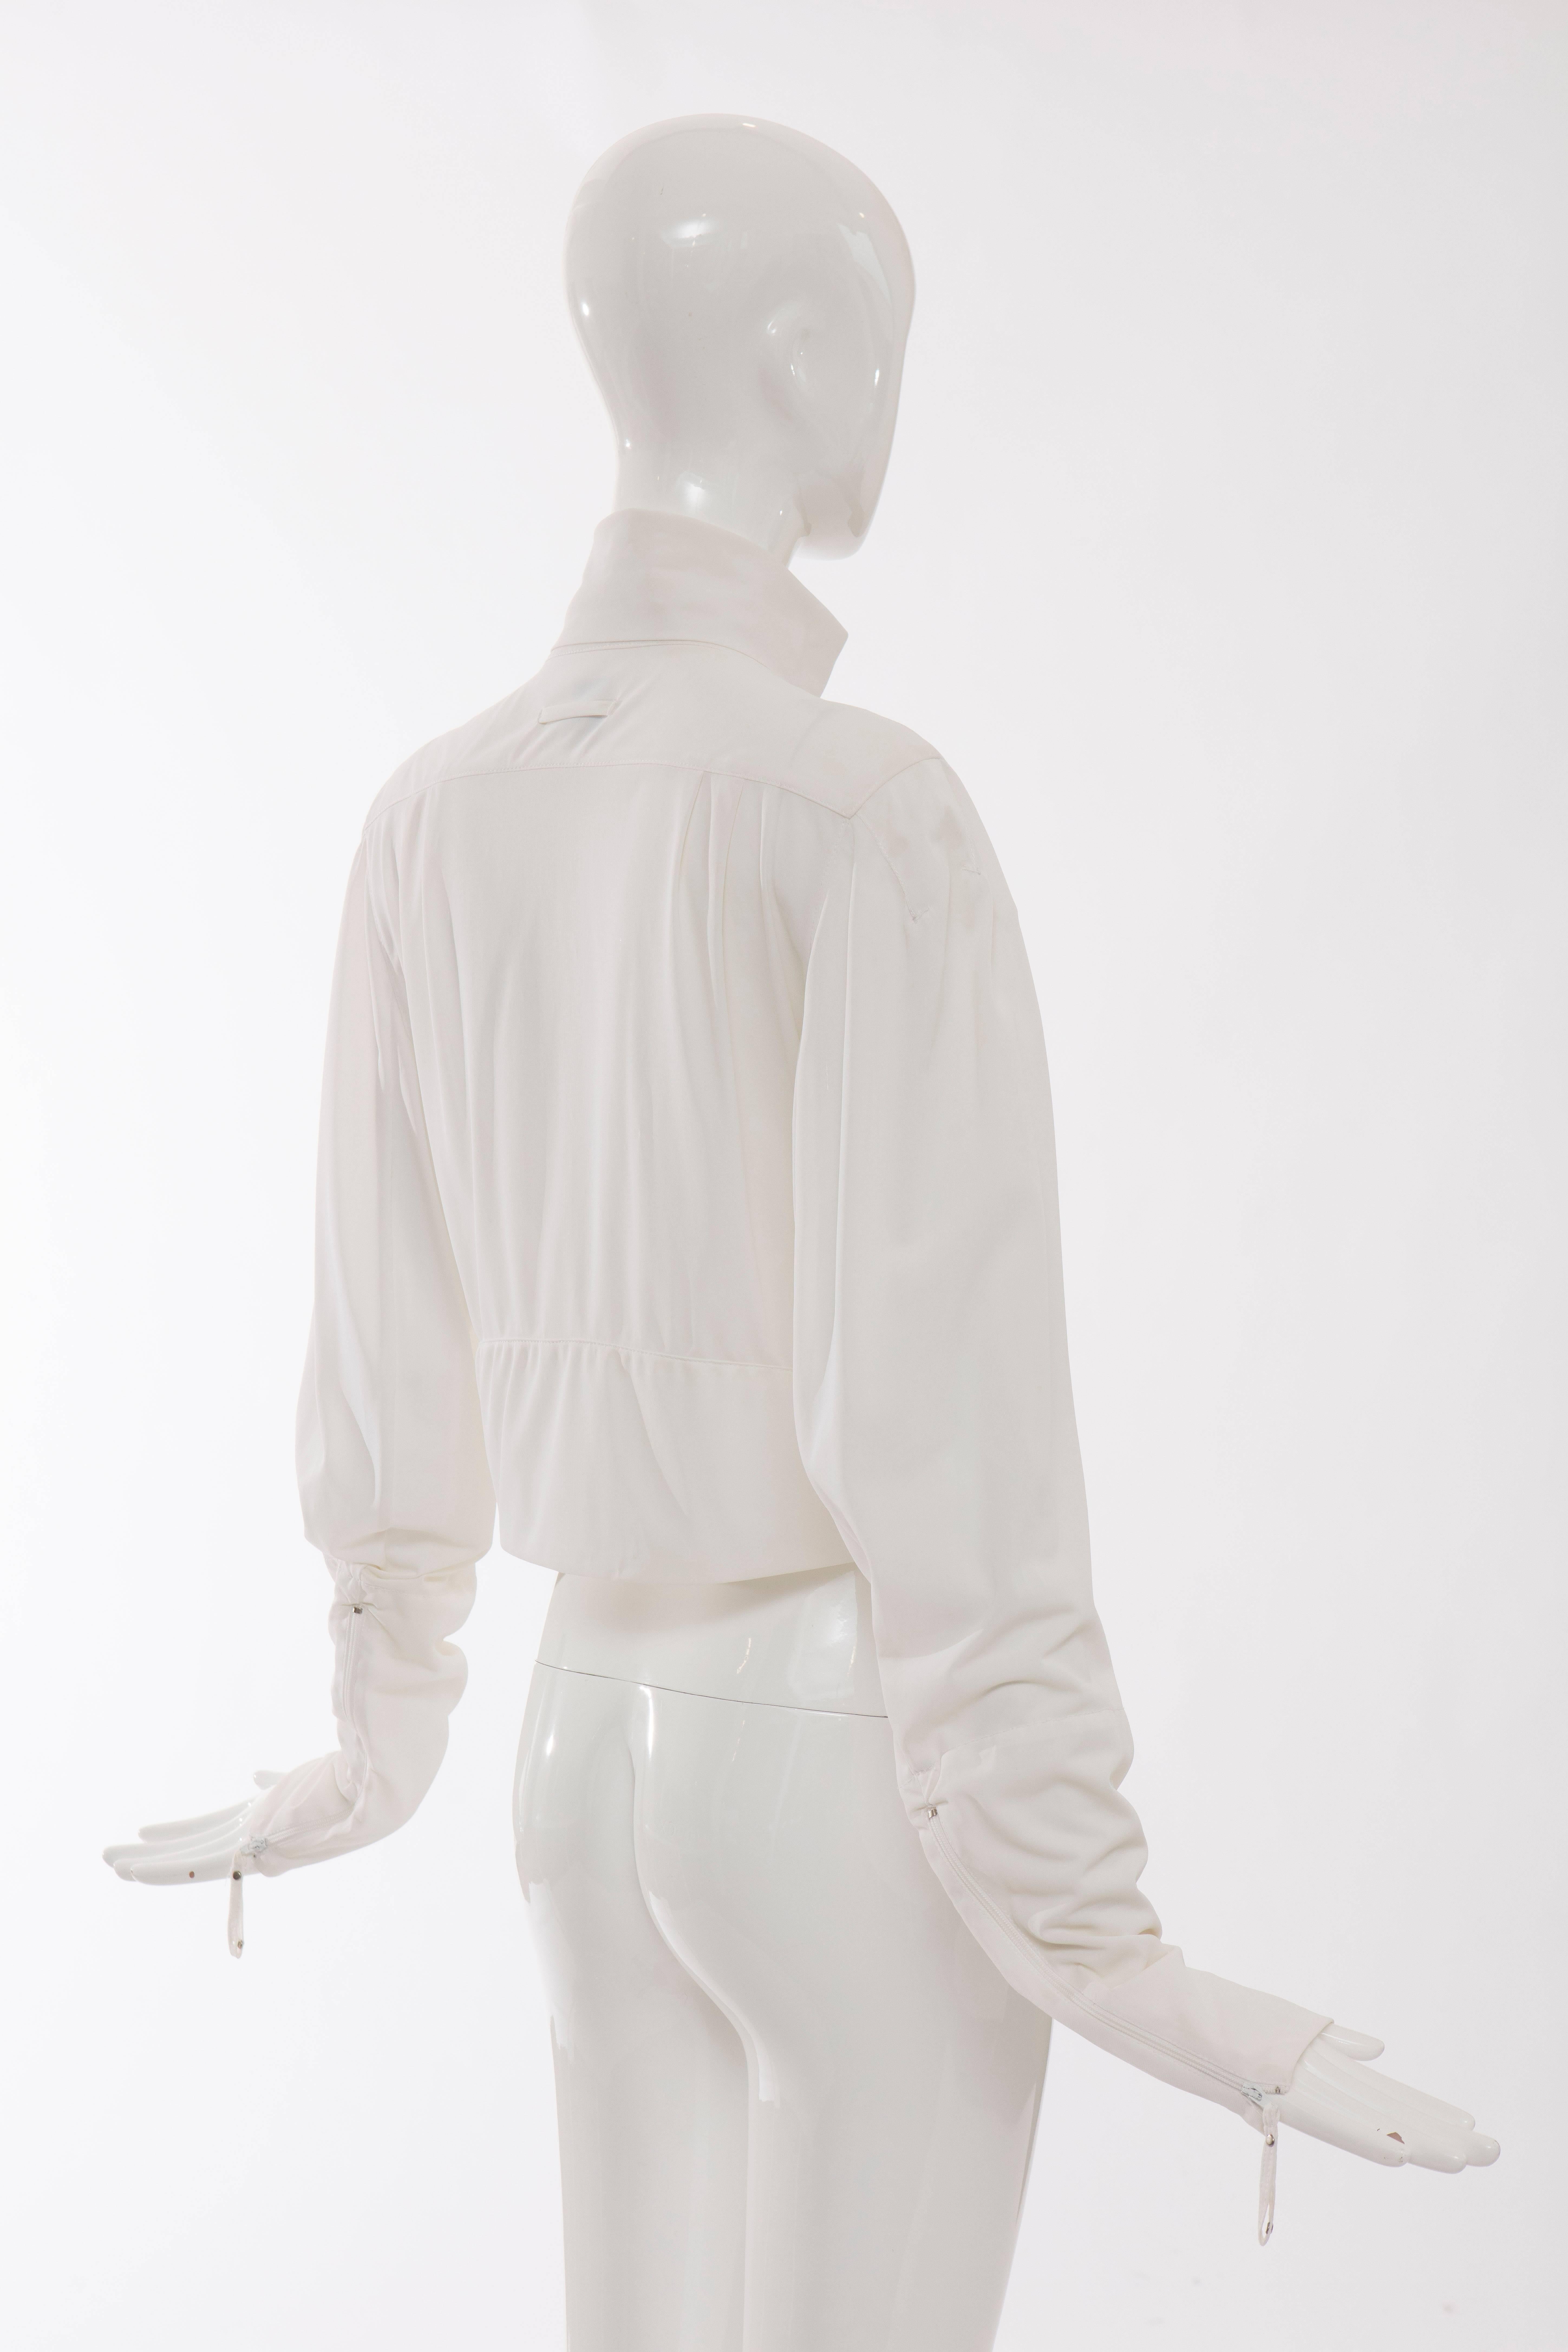 Jean Paul Gaultier White Nylon Zip Front Jacket, Circa 1990s For Sale 2